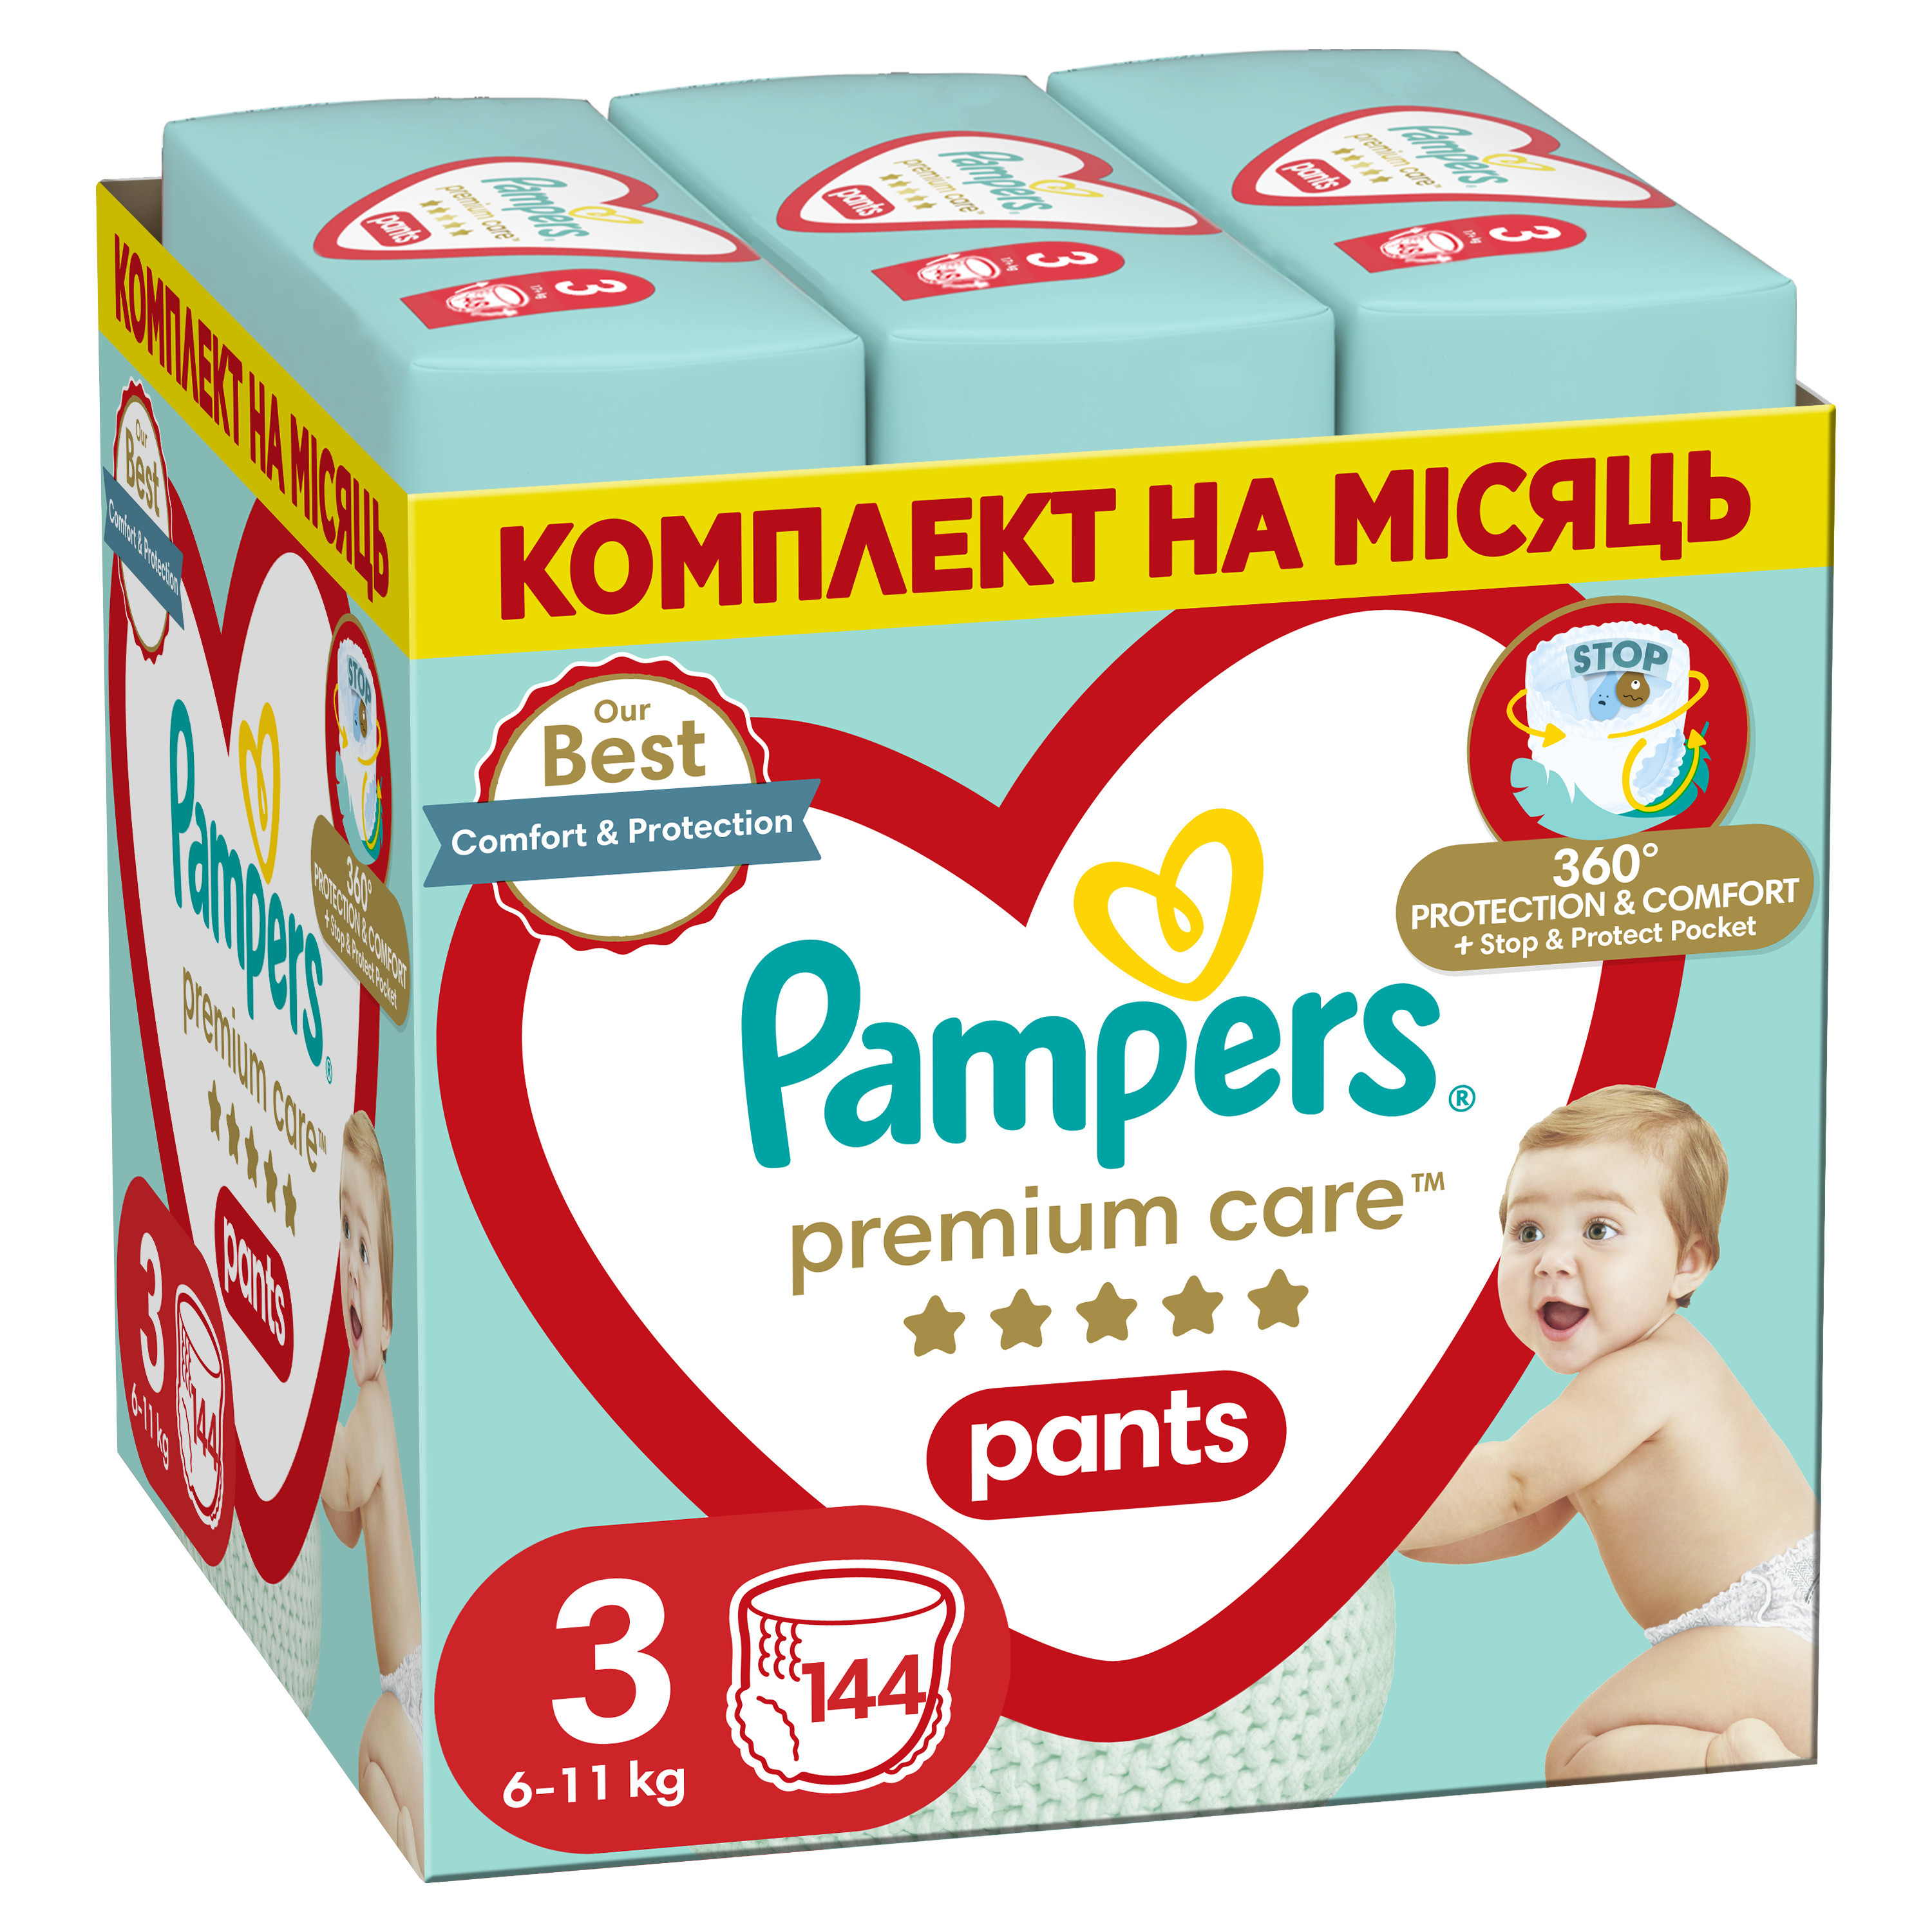 Подгузники-трусики Pampers Premium Care Pants Midi 3 (6-11 кг) 144 шт. - фото 1